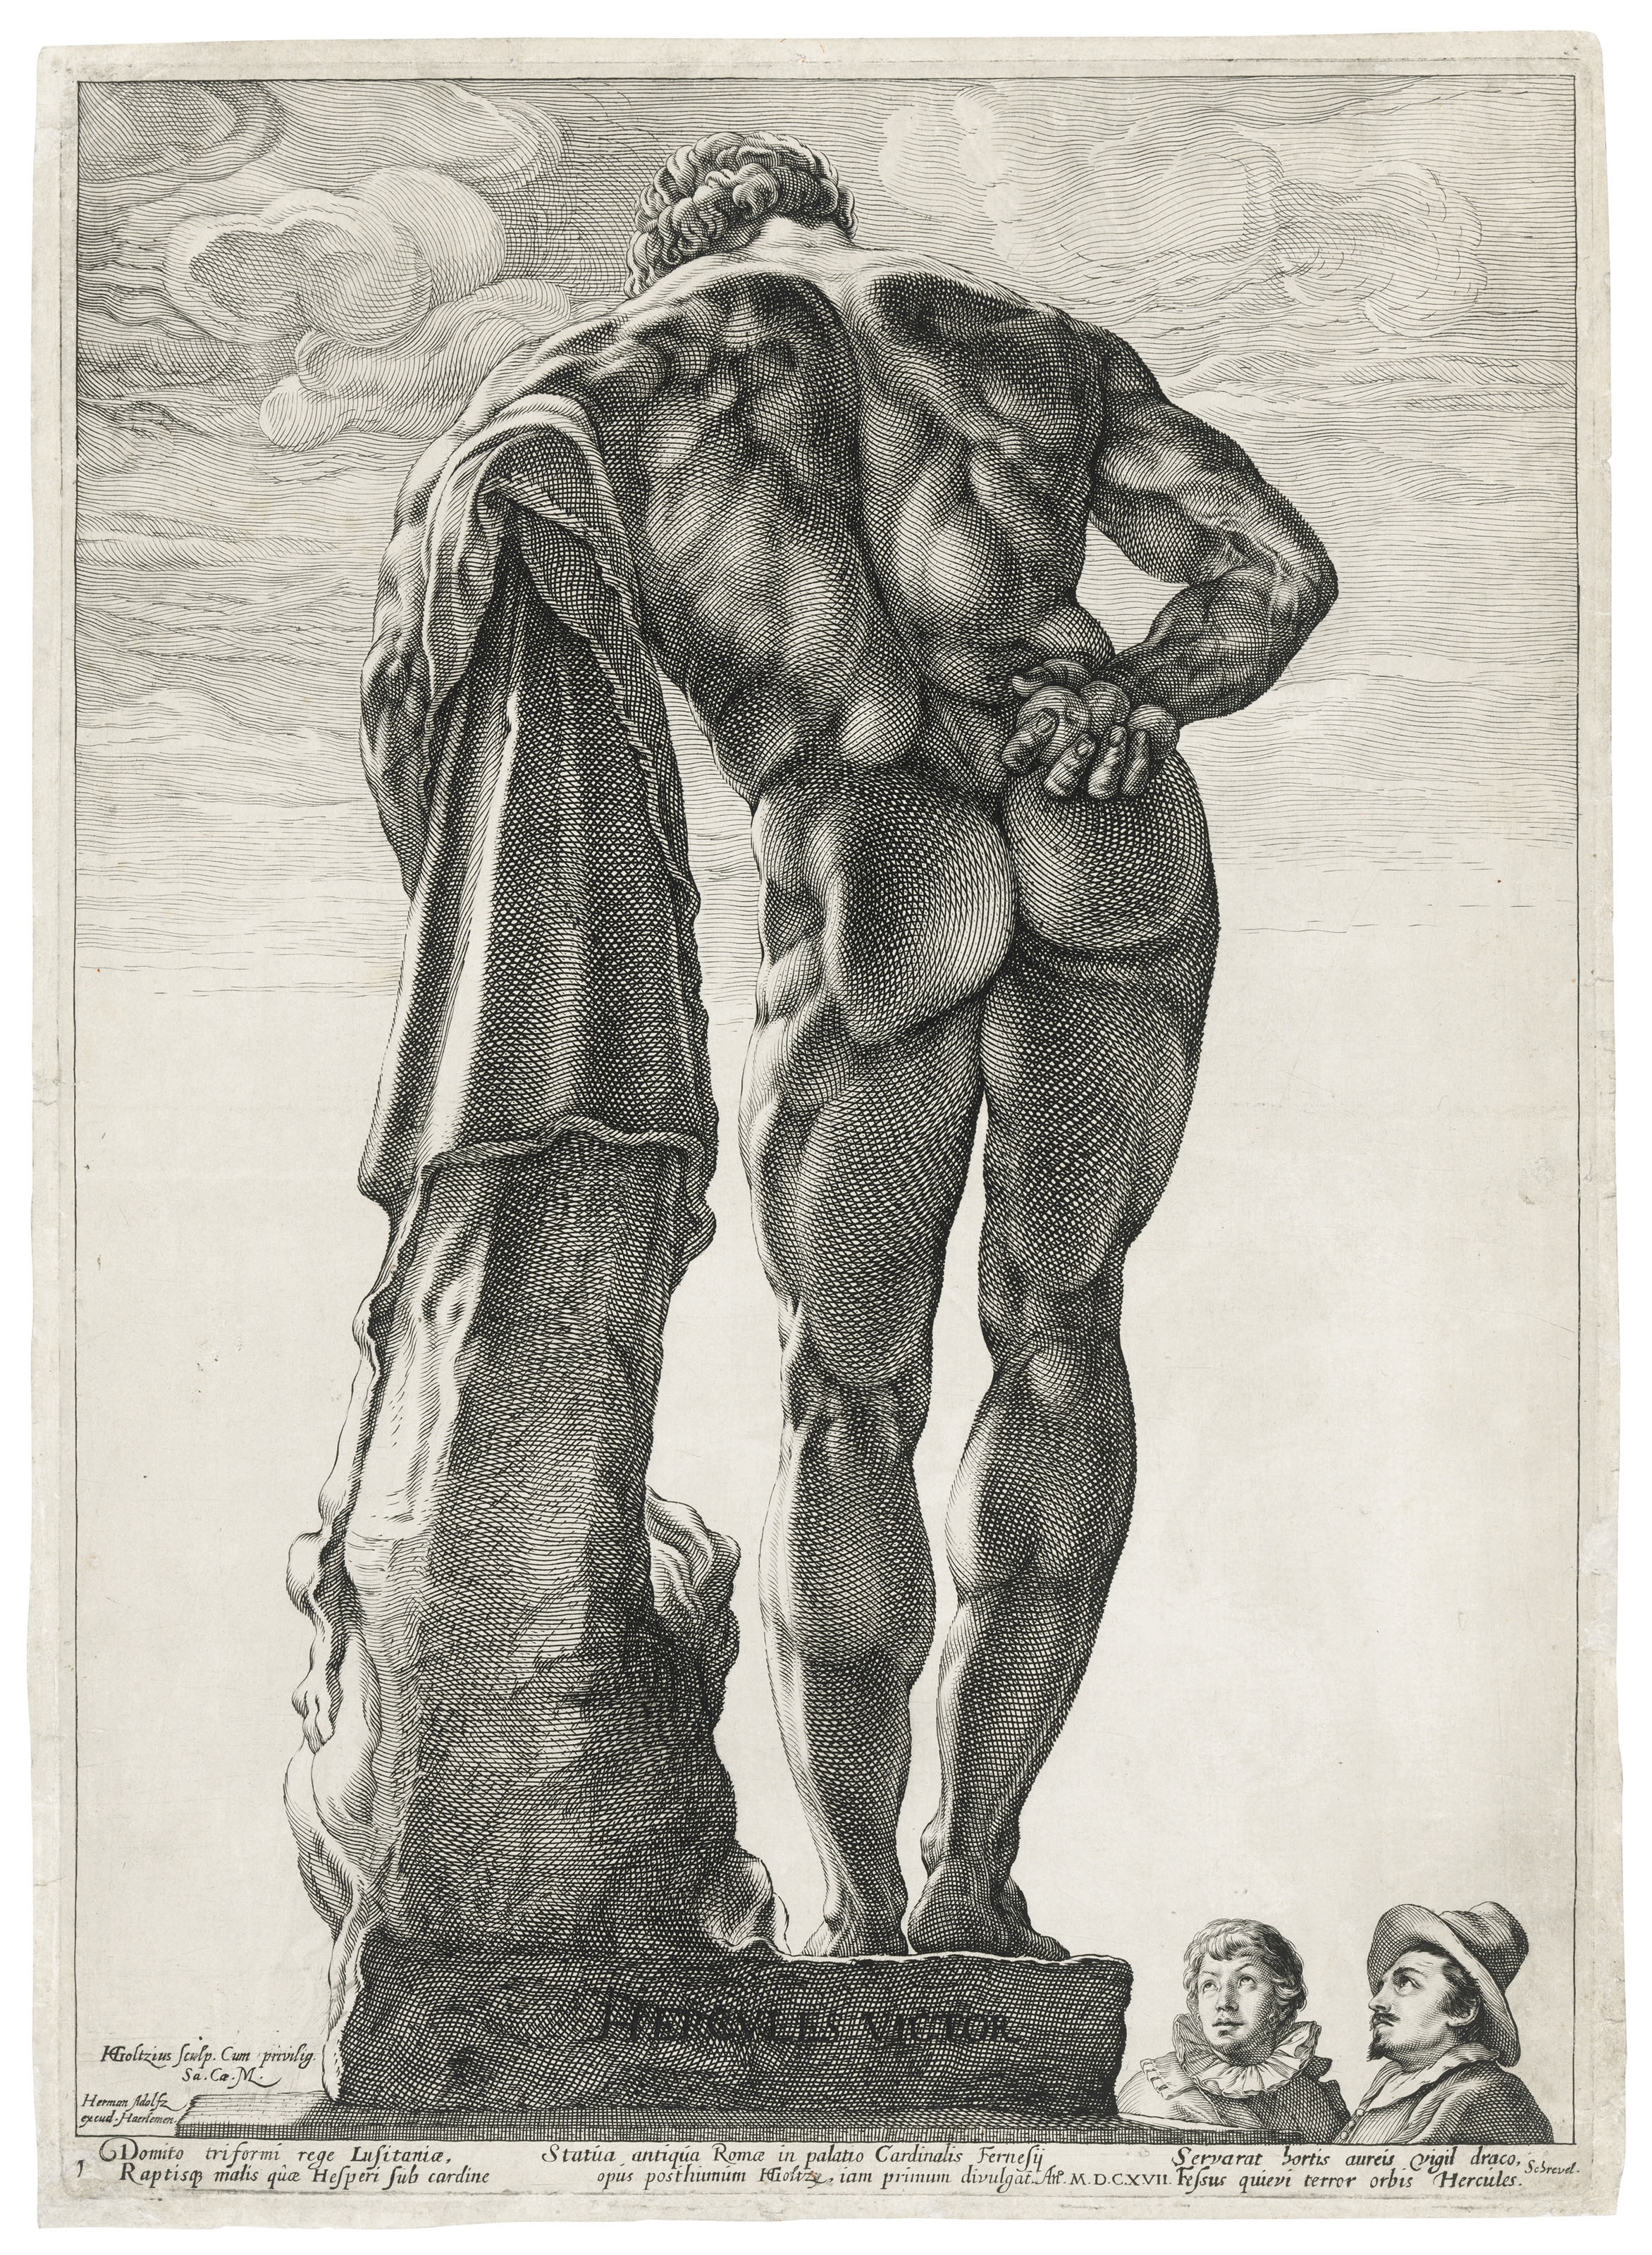 The Farnese Hercules by Hendrick Goltzius, 1592